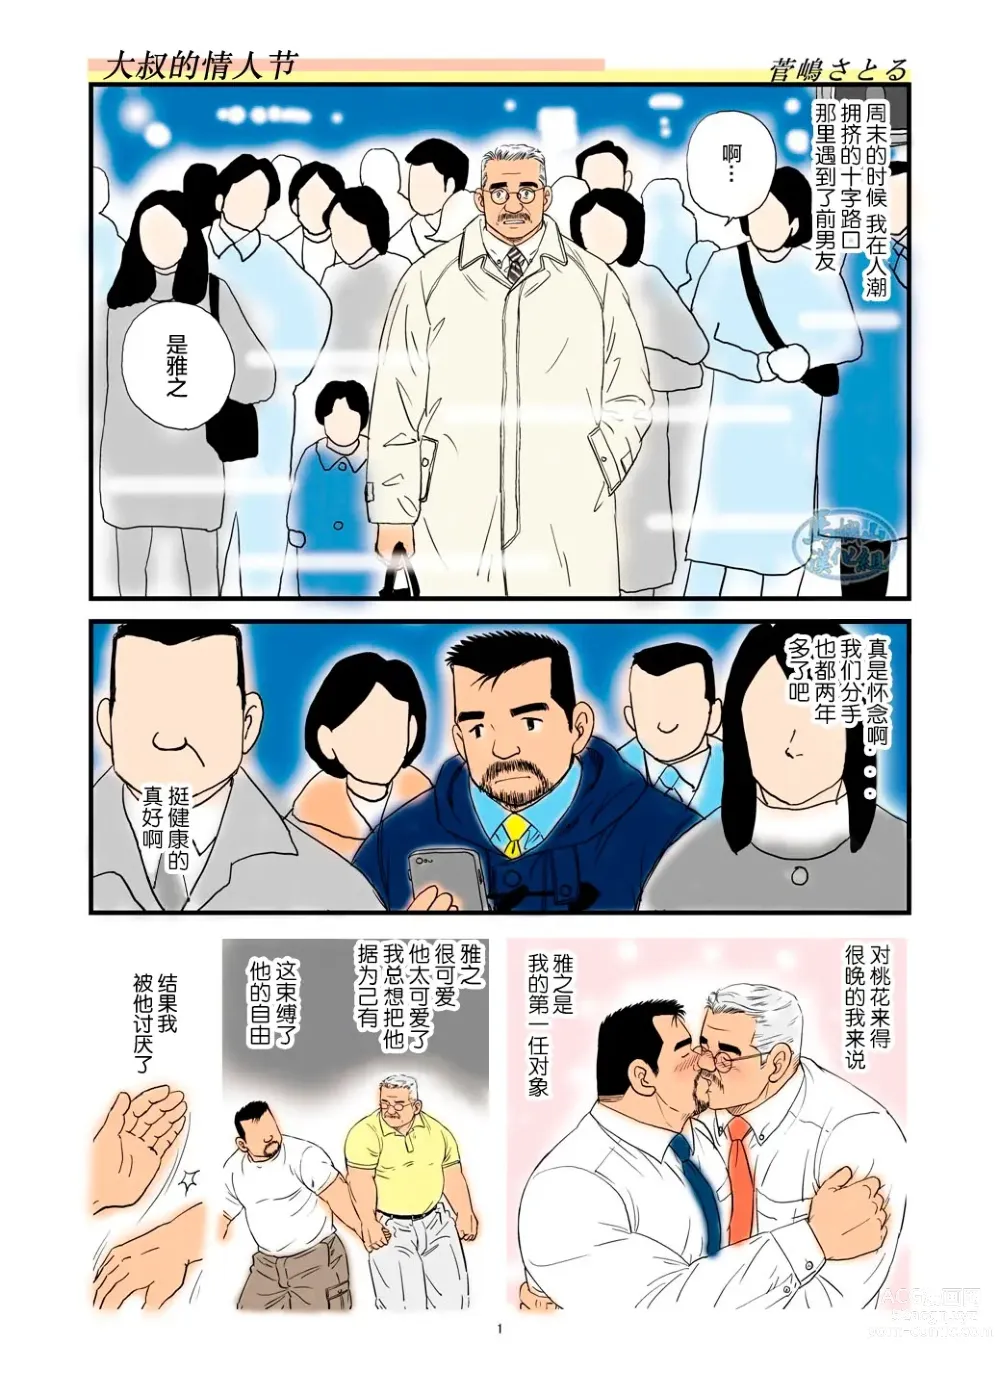 Page 19 of manga 「铁道员的浪漫」第一回 深夜的站长室